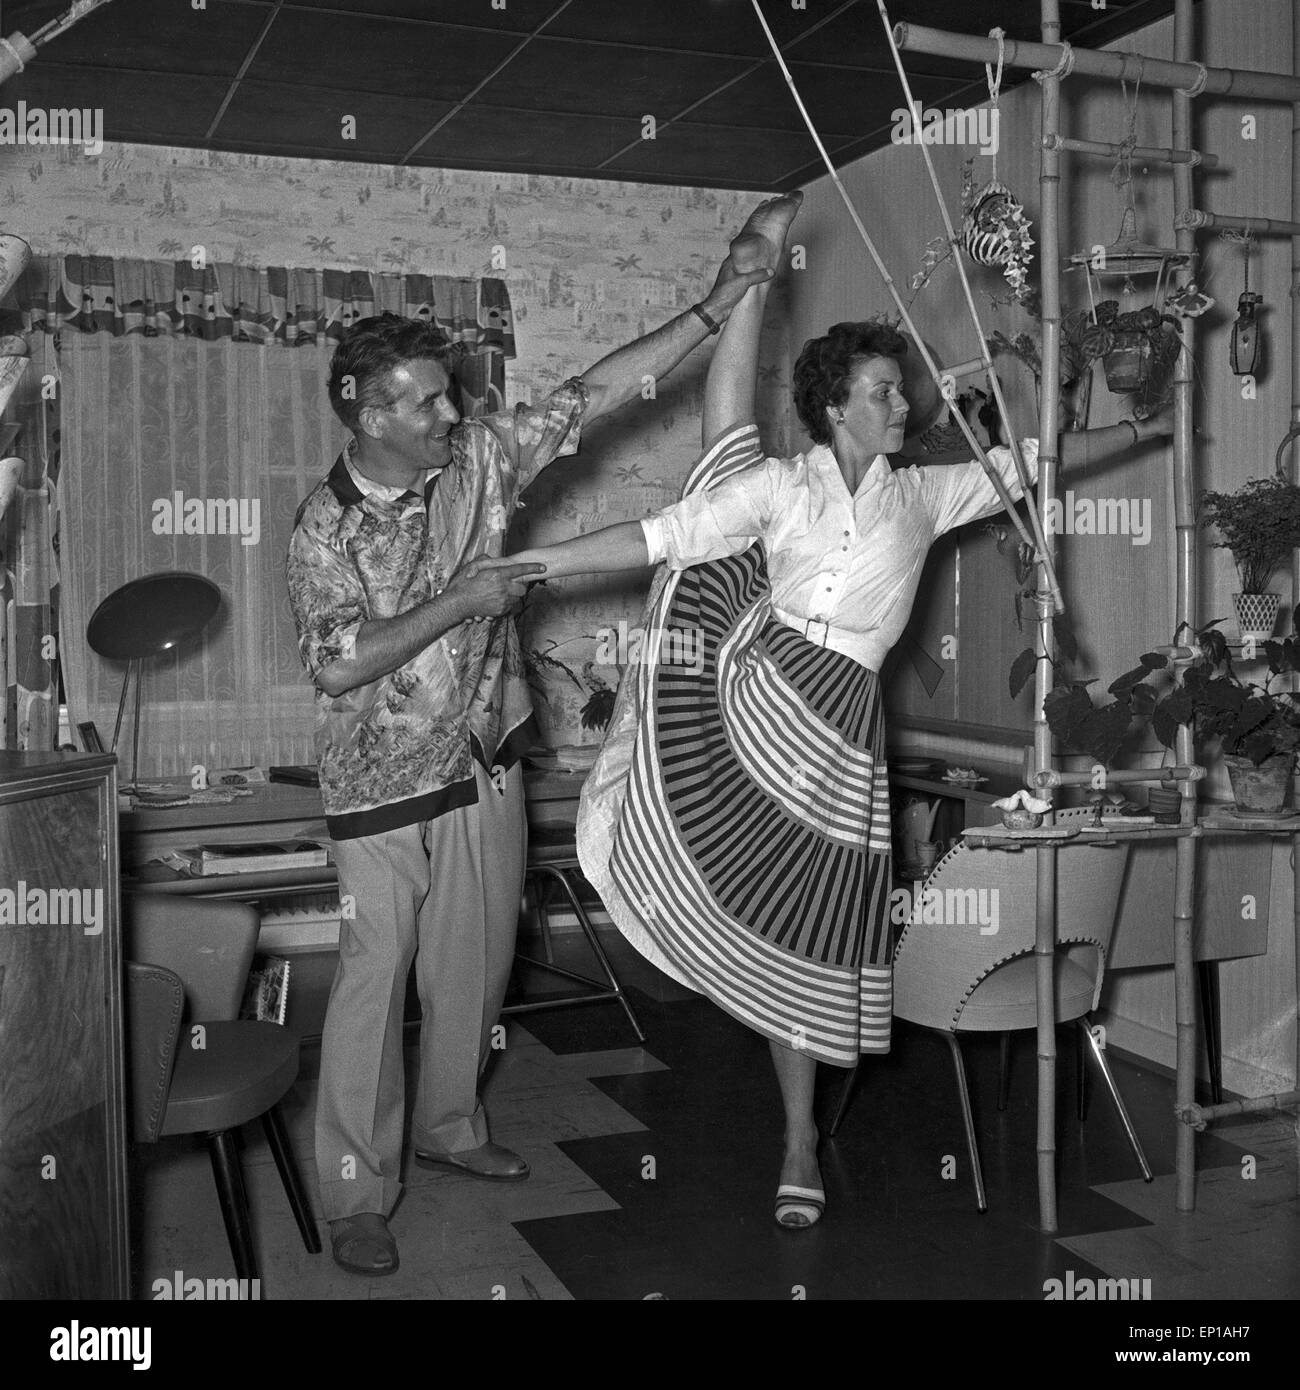 Der Sänger vom Duo hilft beim partenaire de senneur Ballett en Hamburg, Deutschland 1950 er Jahre. Chanteur du duo d'aider la partie sig Banque D'Images